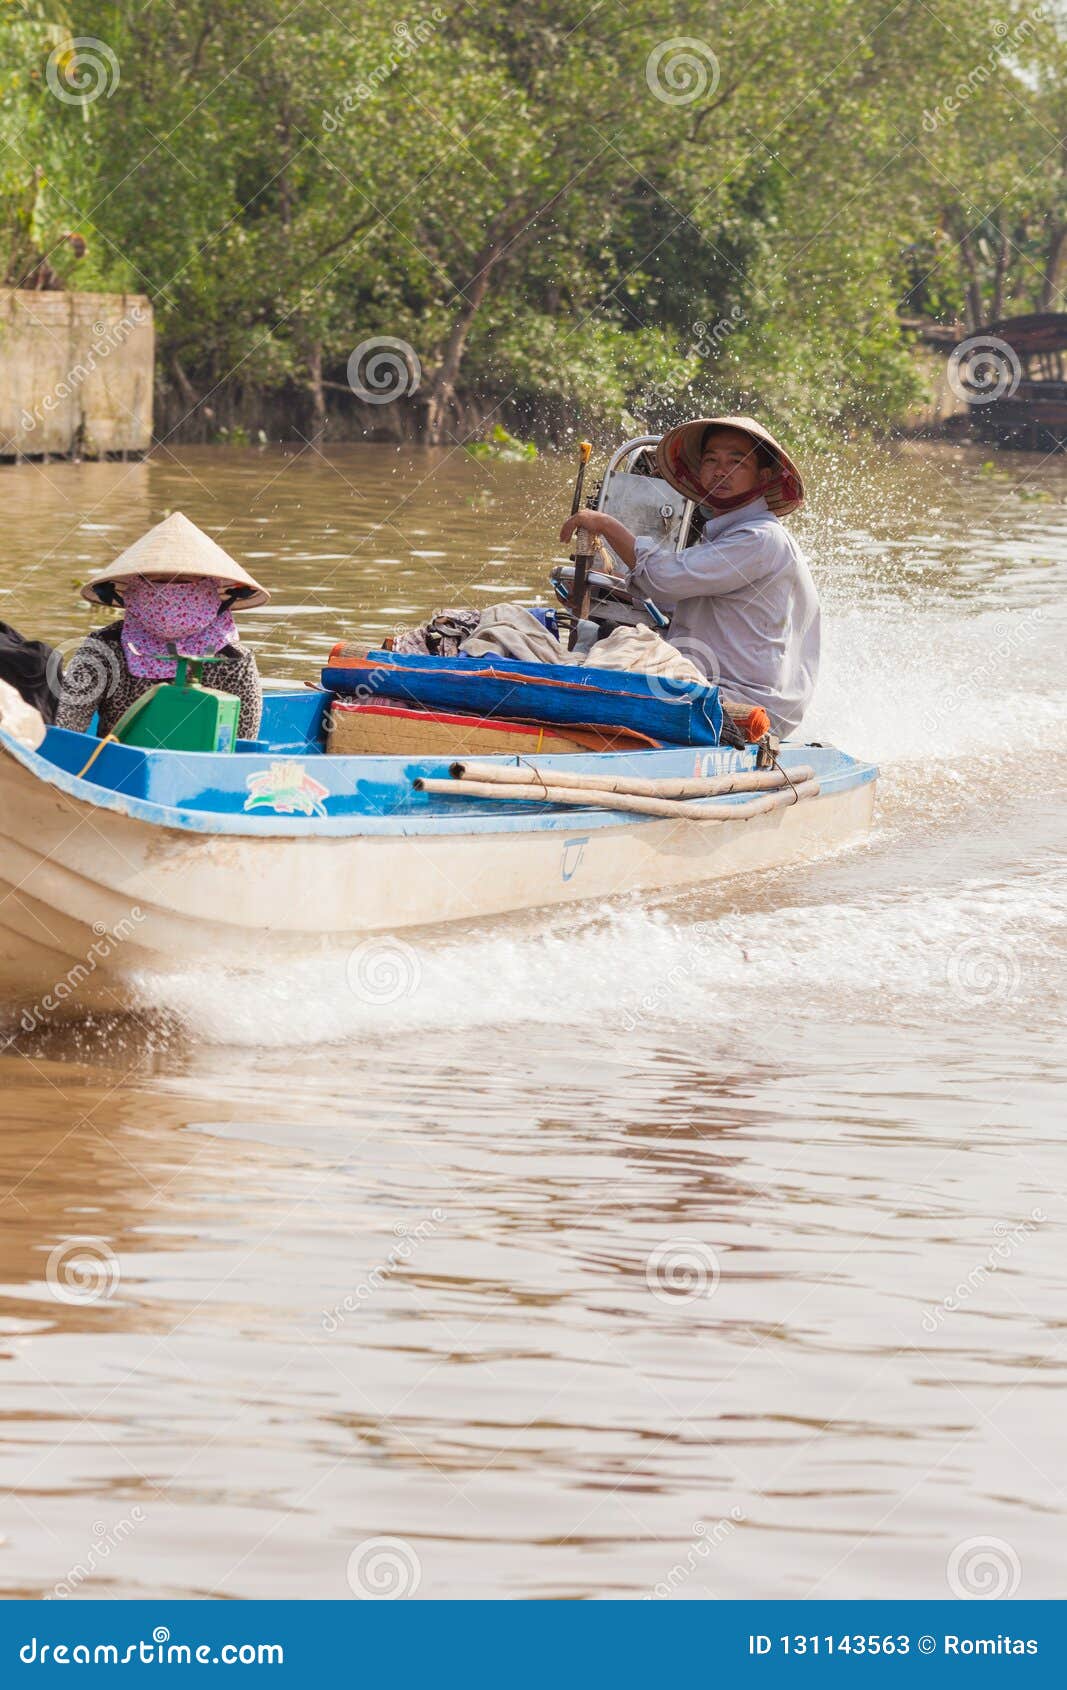 motorboat in vietnamese